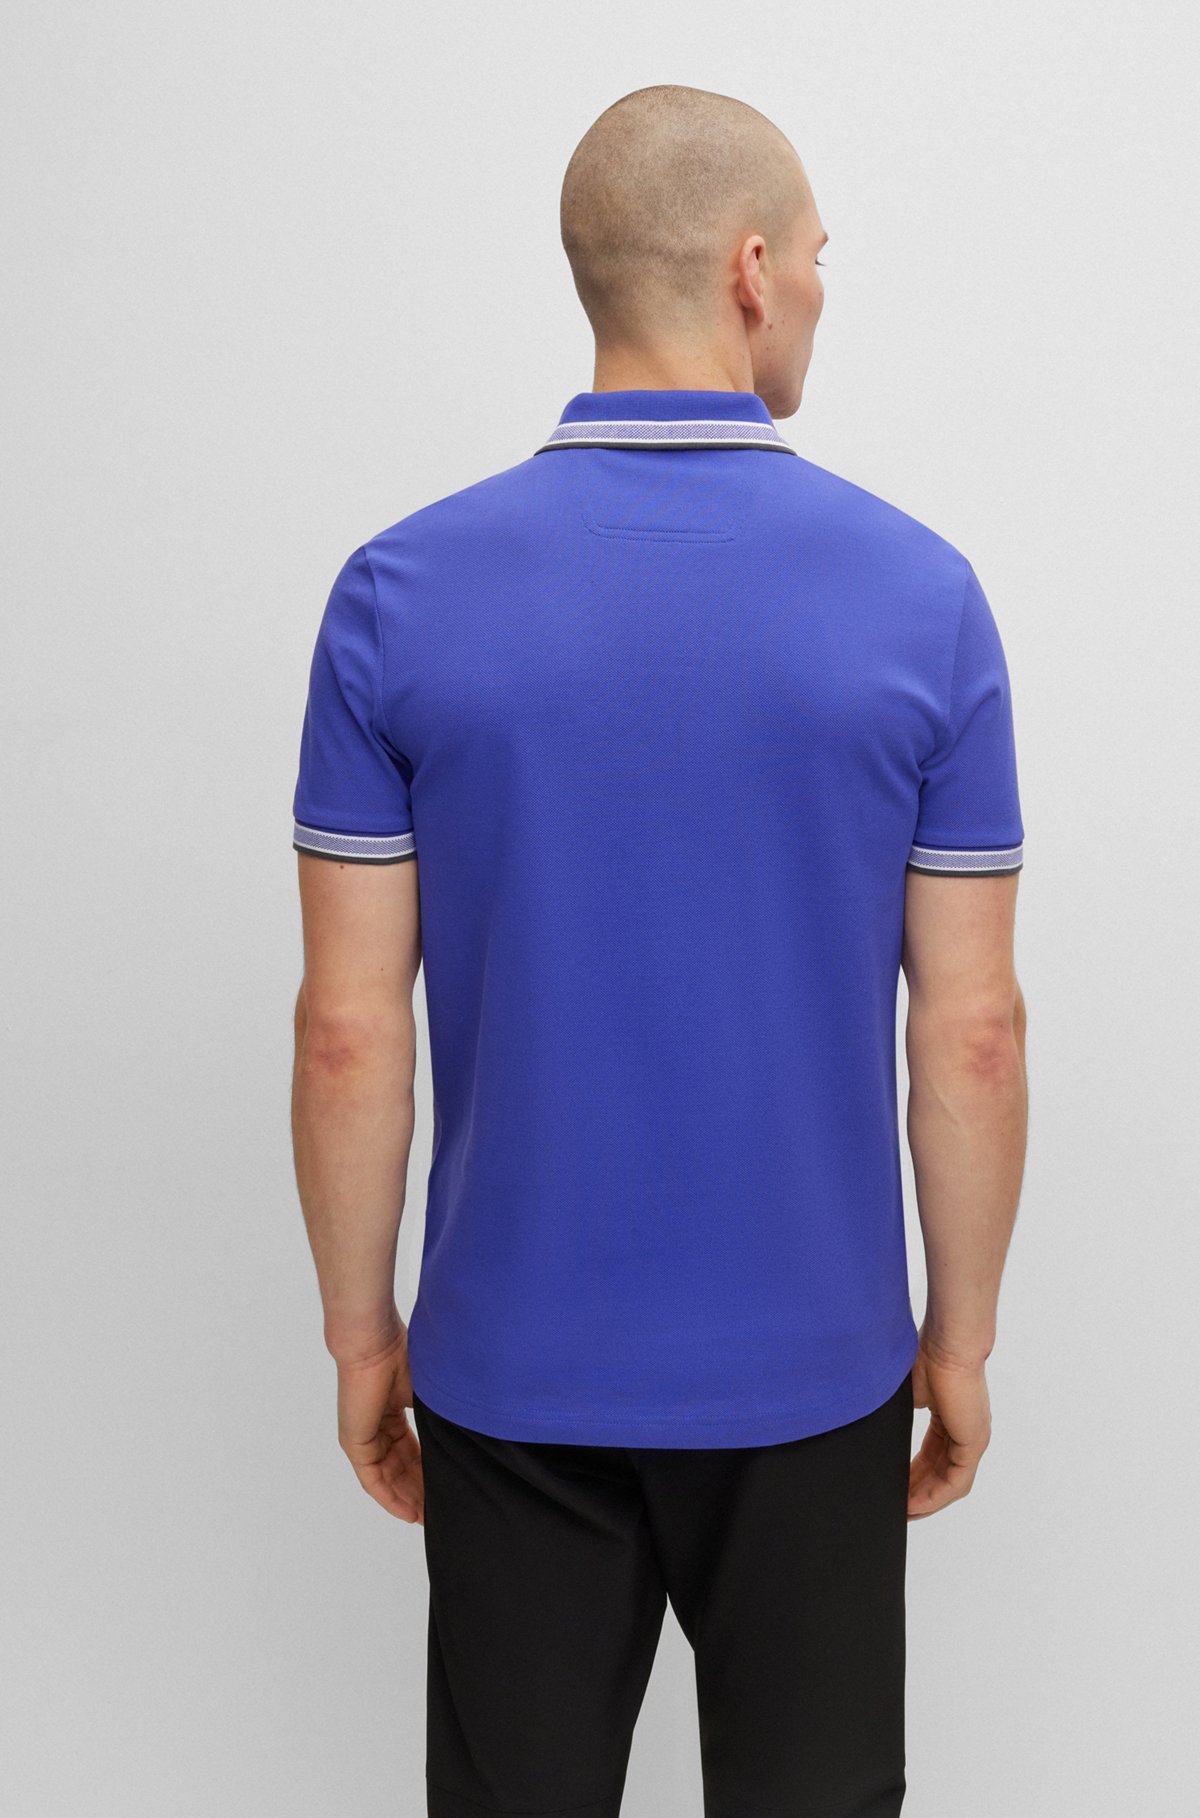 Organic-cotton polo shirt with logo, Dark Purple